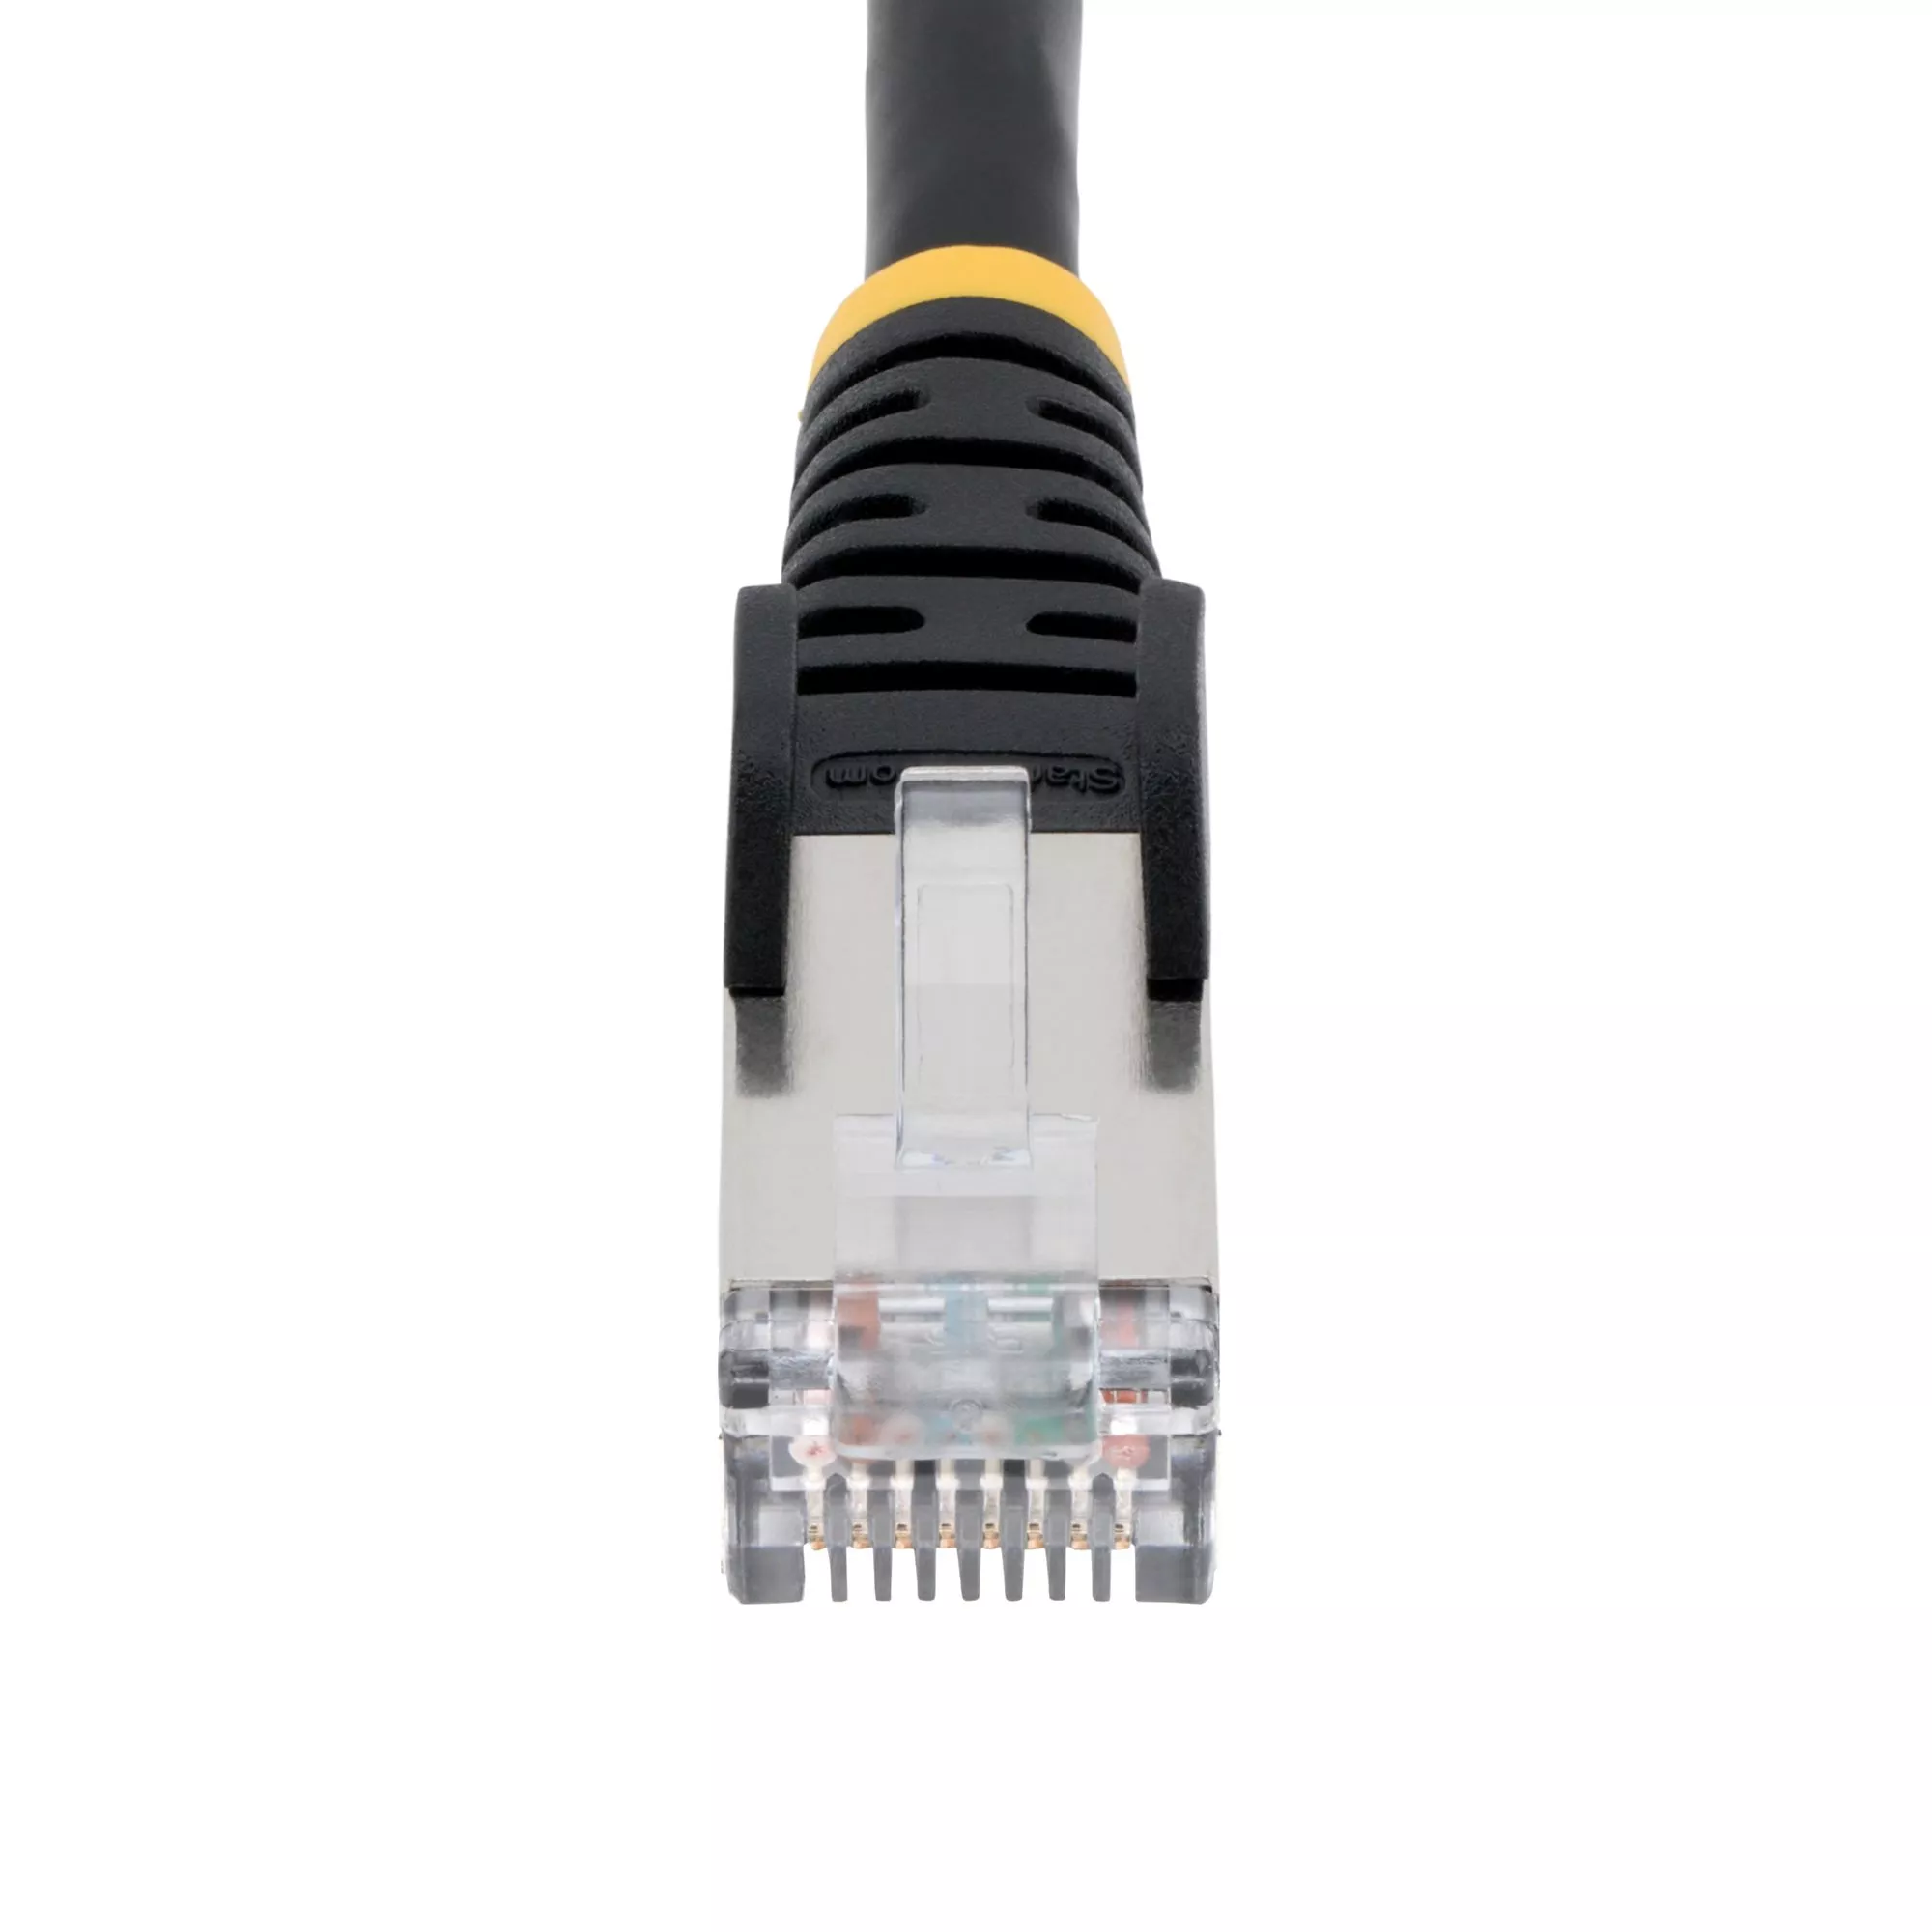 Vente StarTech.com Câble Ethernet CAT6a 3m - Low Smoke StarTech.com au meilleur prix - visuel 4